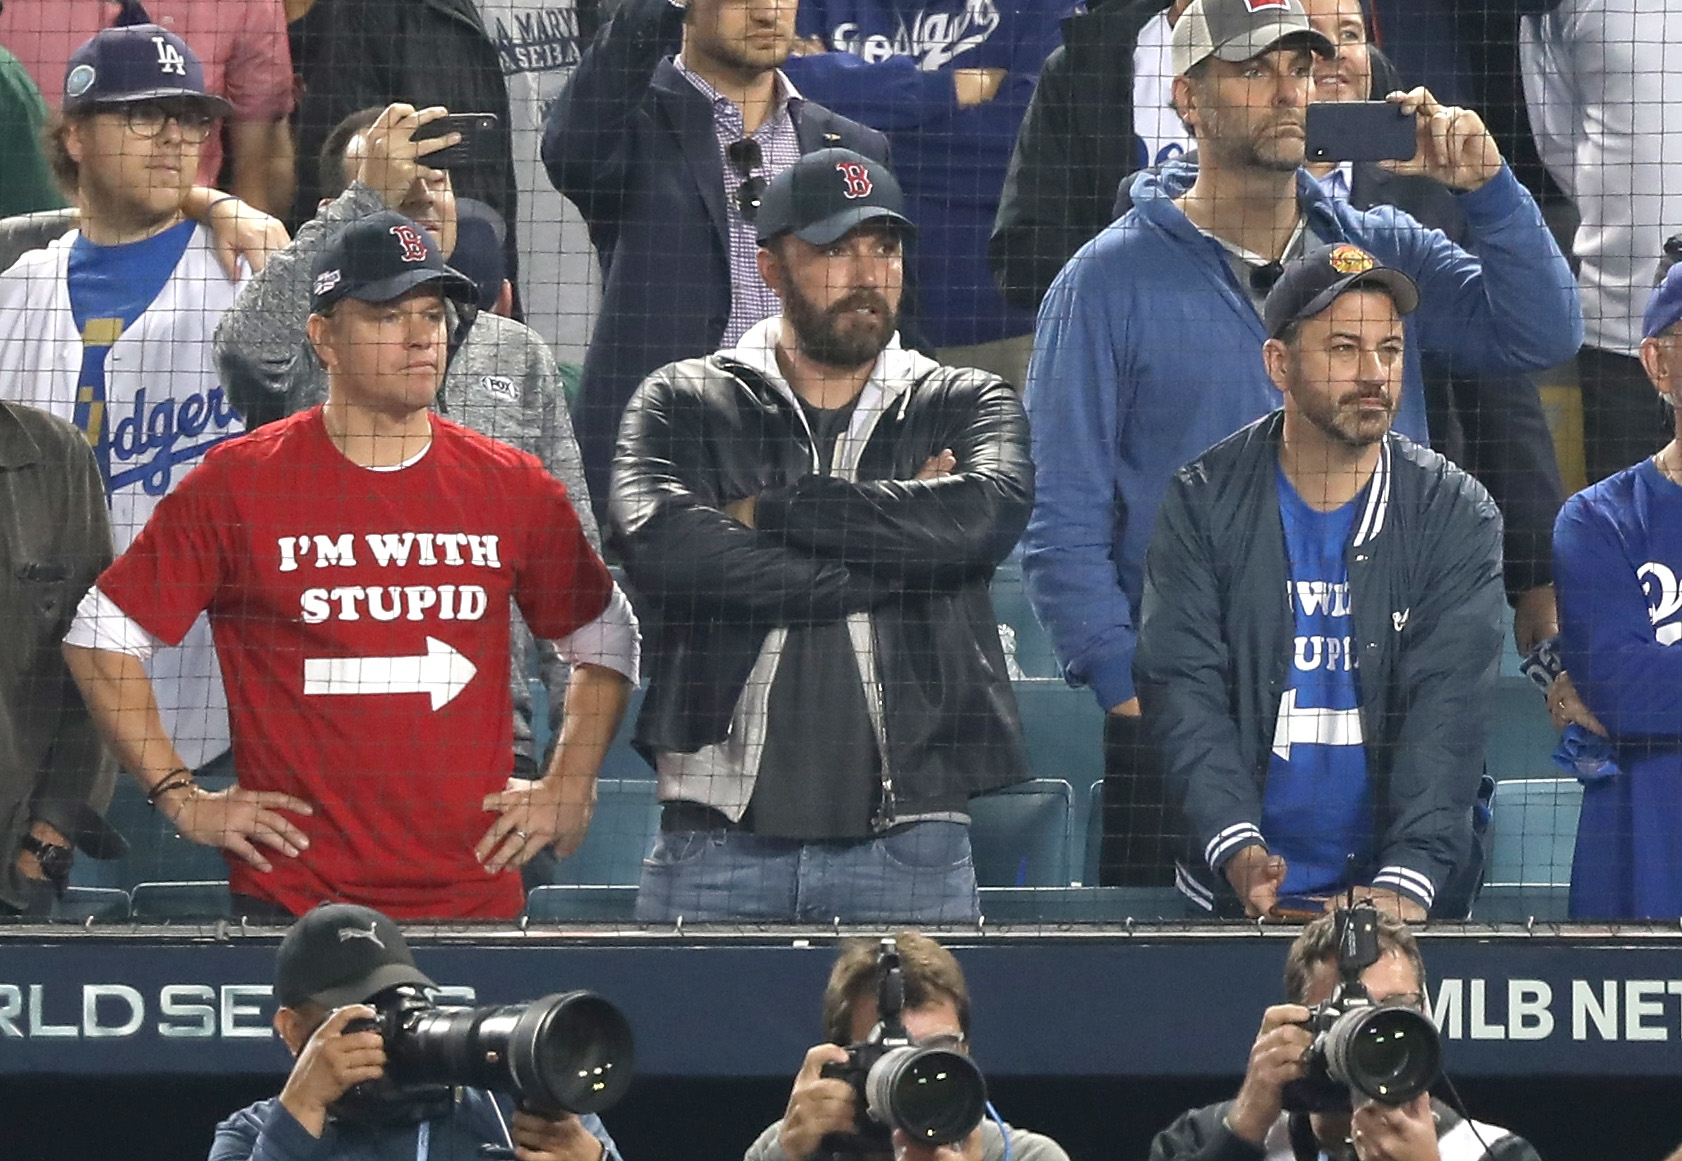 Matt Damon and Ben Affleck with Jimmy at a baseball game